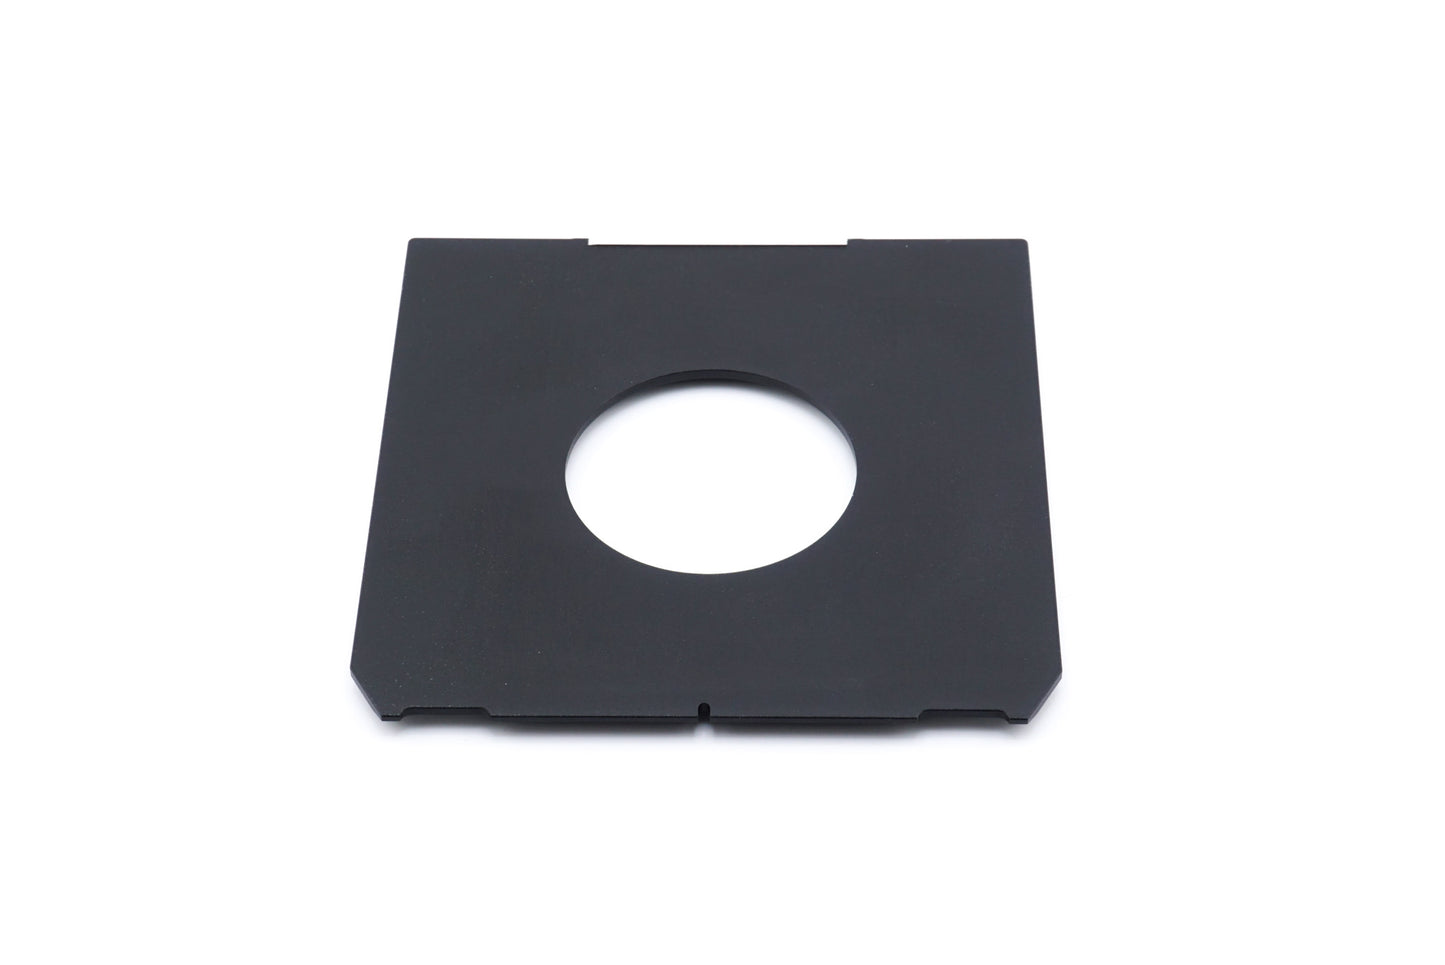 Linhof / Wista Large Format Lens Board (99x96mm)